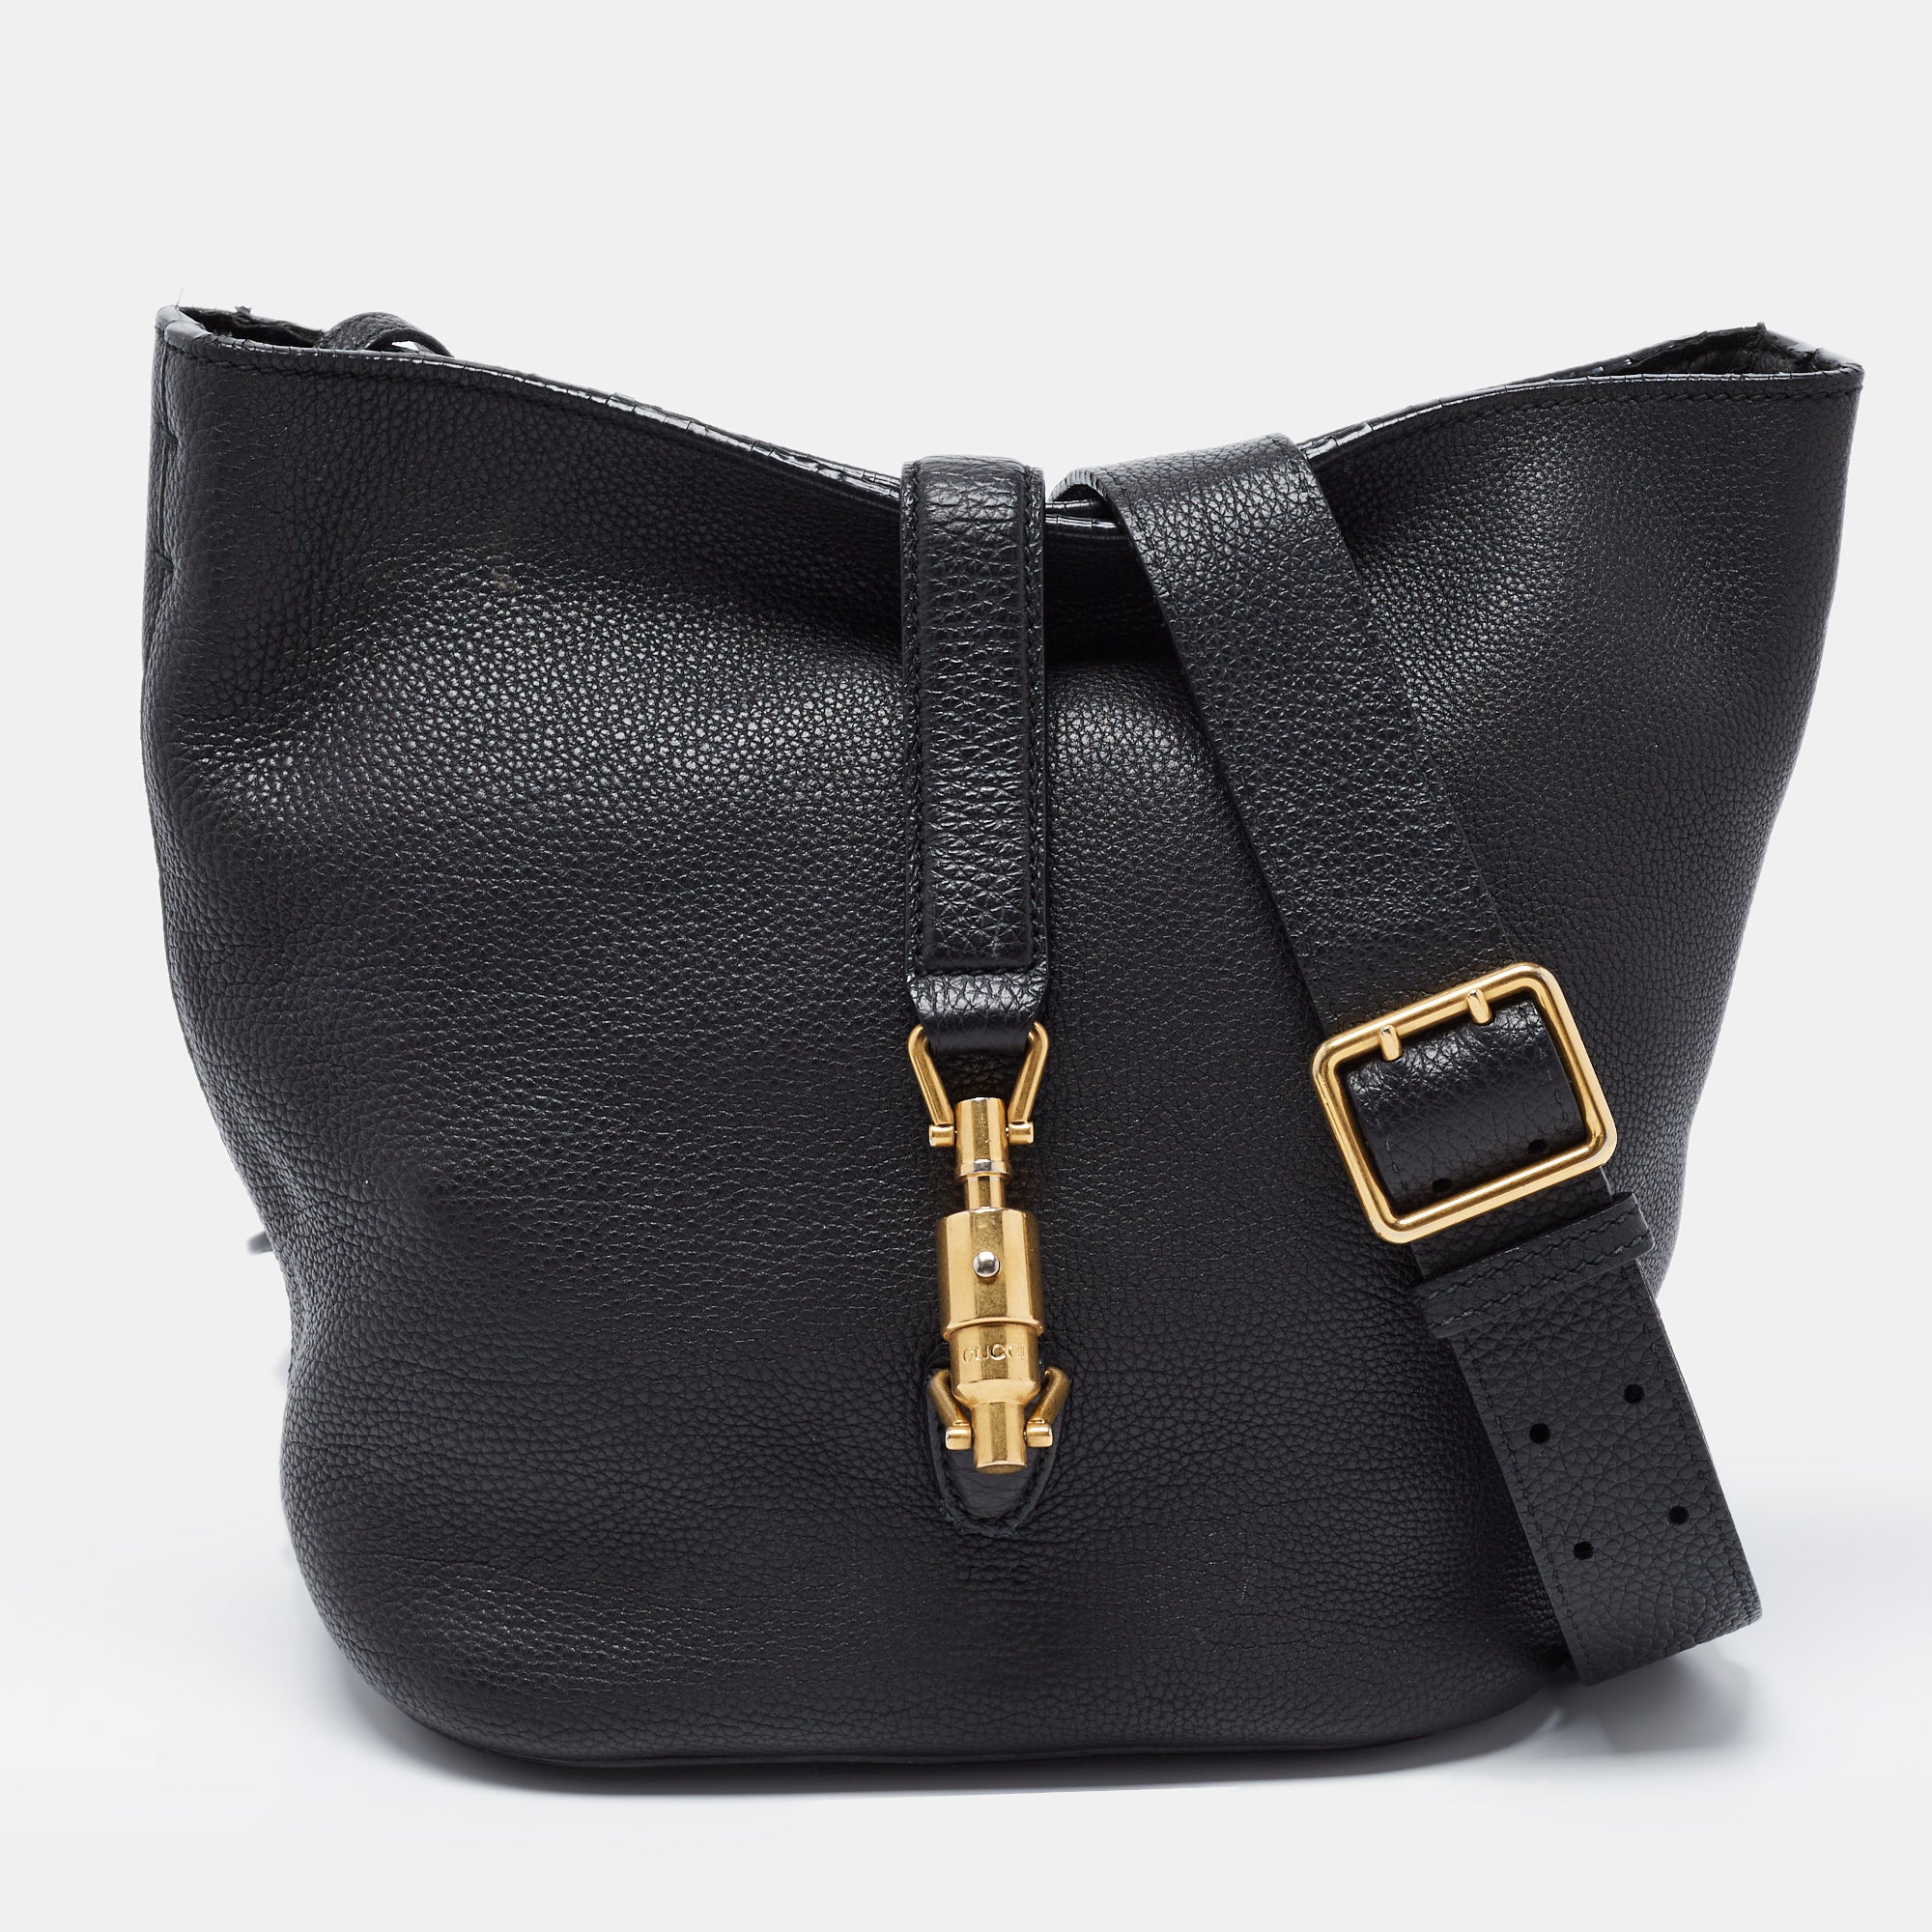 Gucci Soho Small Leather Tote Bag w/ Chain Straps, Black | Gucci tote bag,  Gucci soho bag, Gucci bag